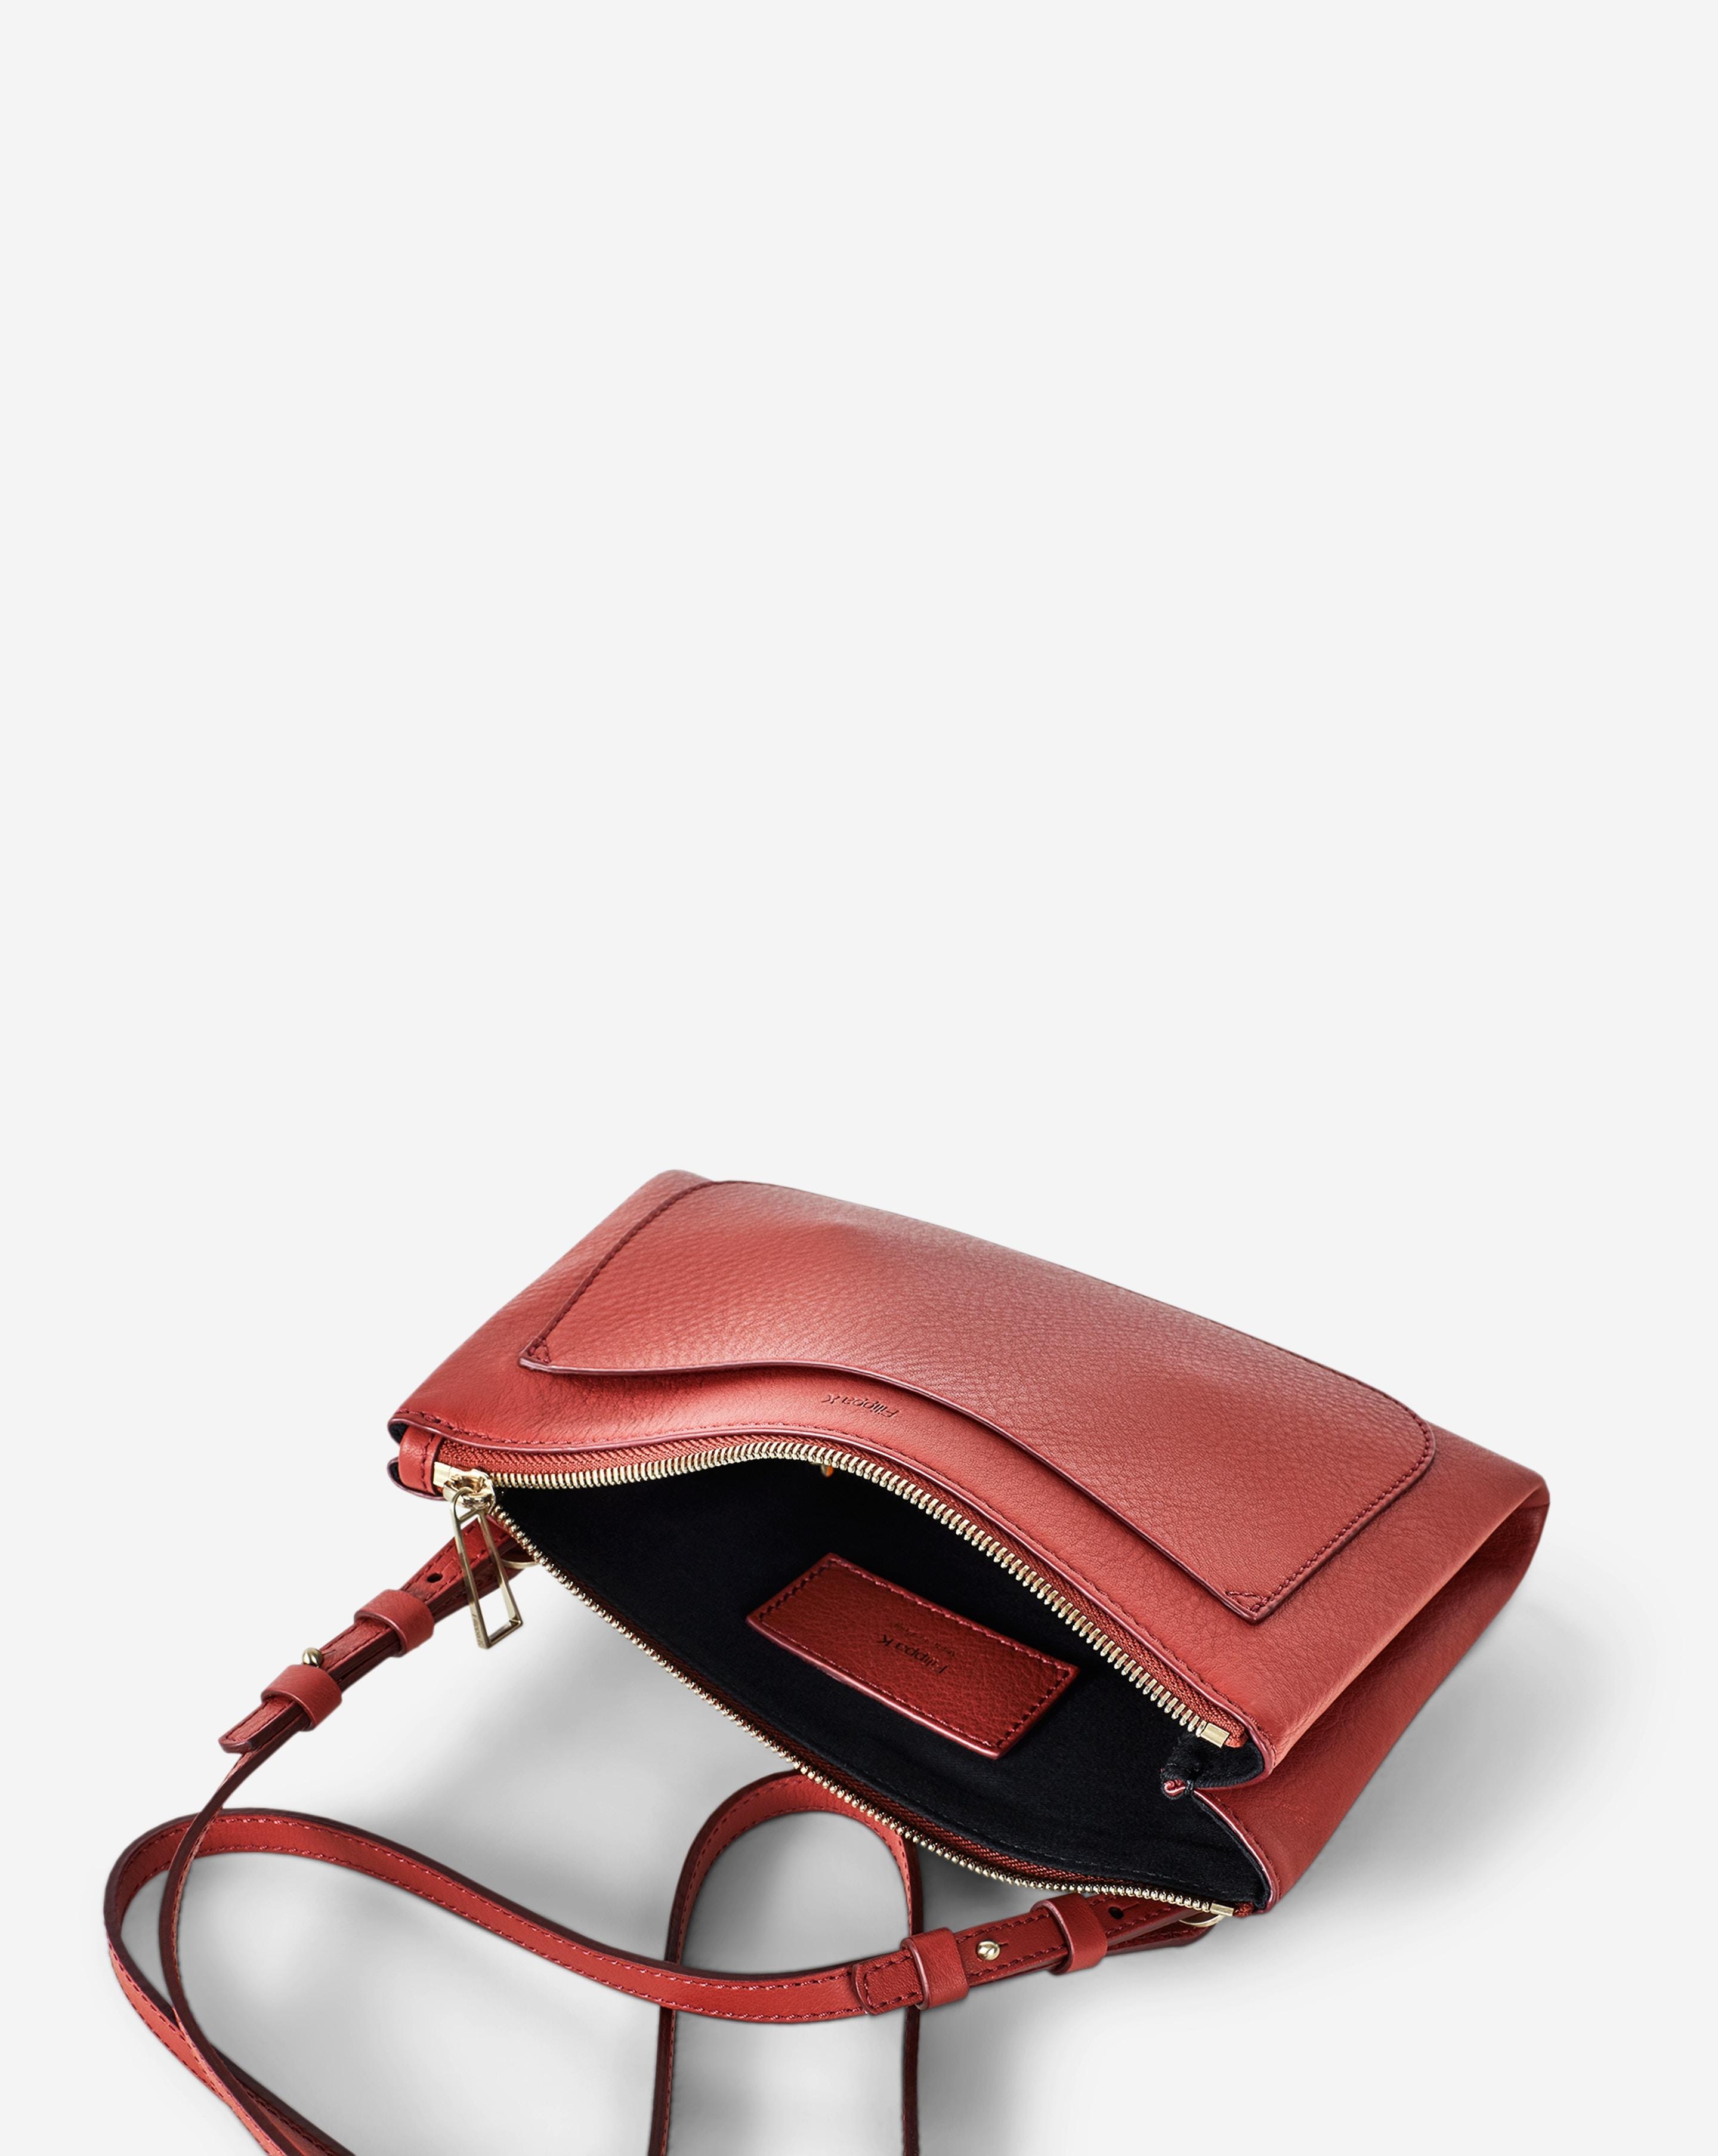 Filippa K Carol Leather Mini Bag Brick in Red - Lyst